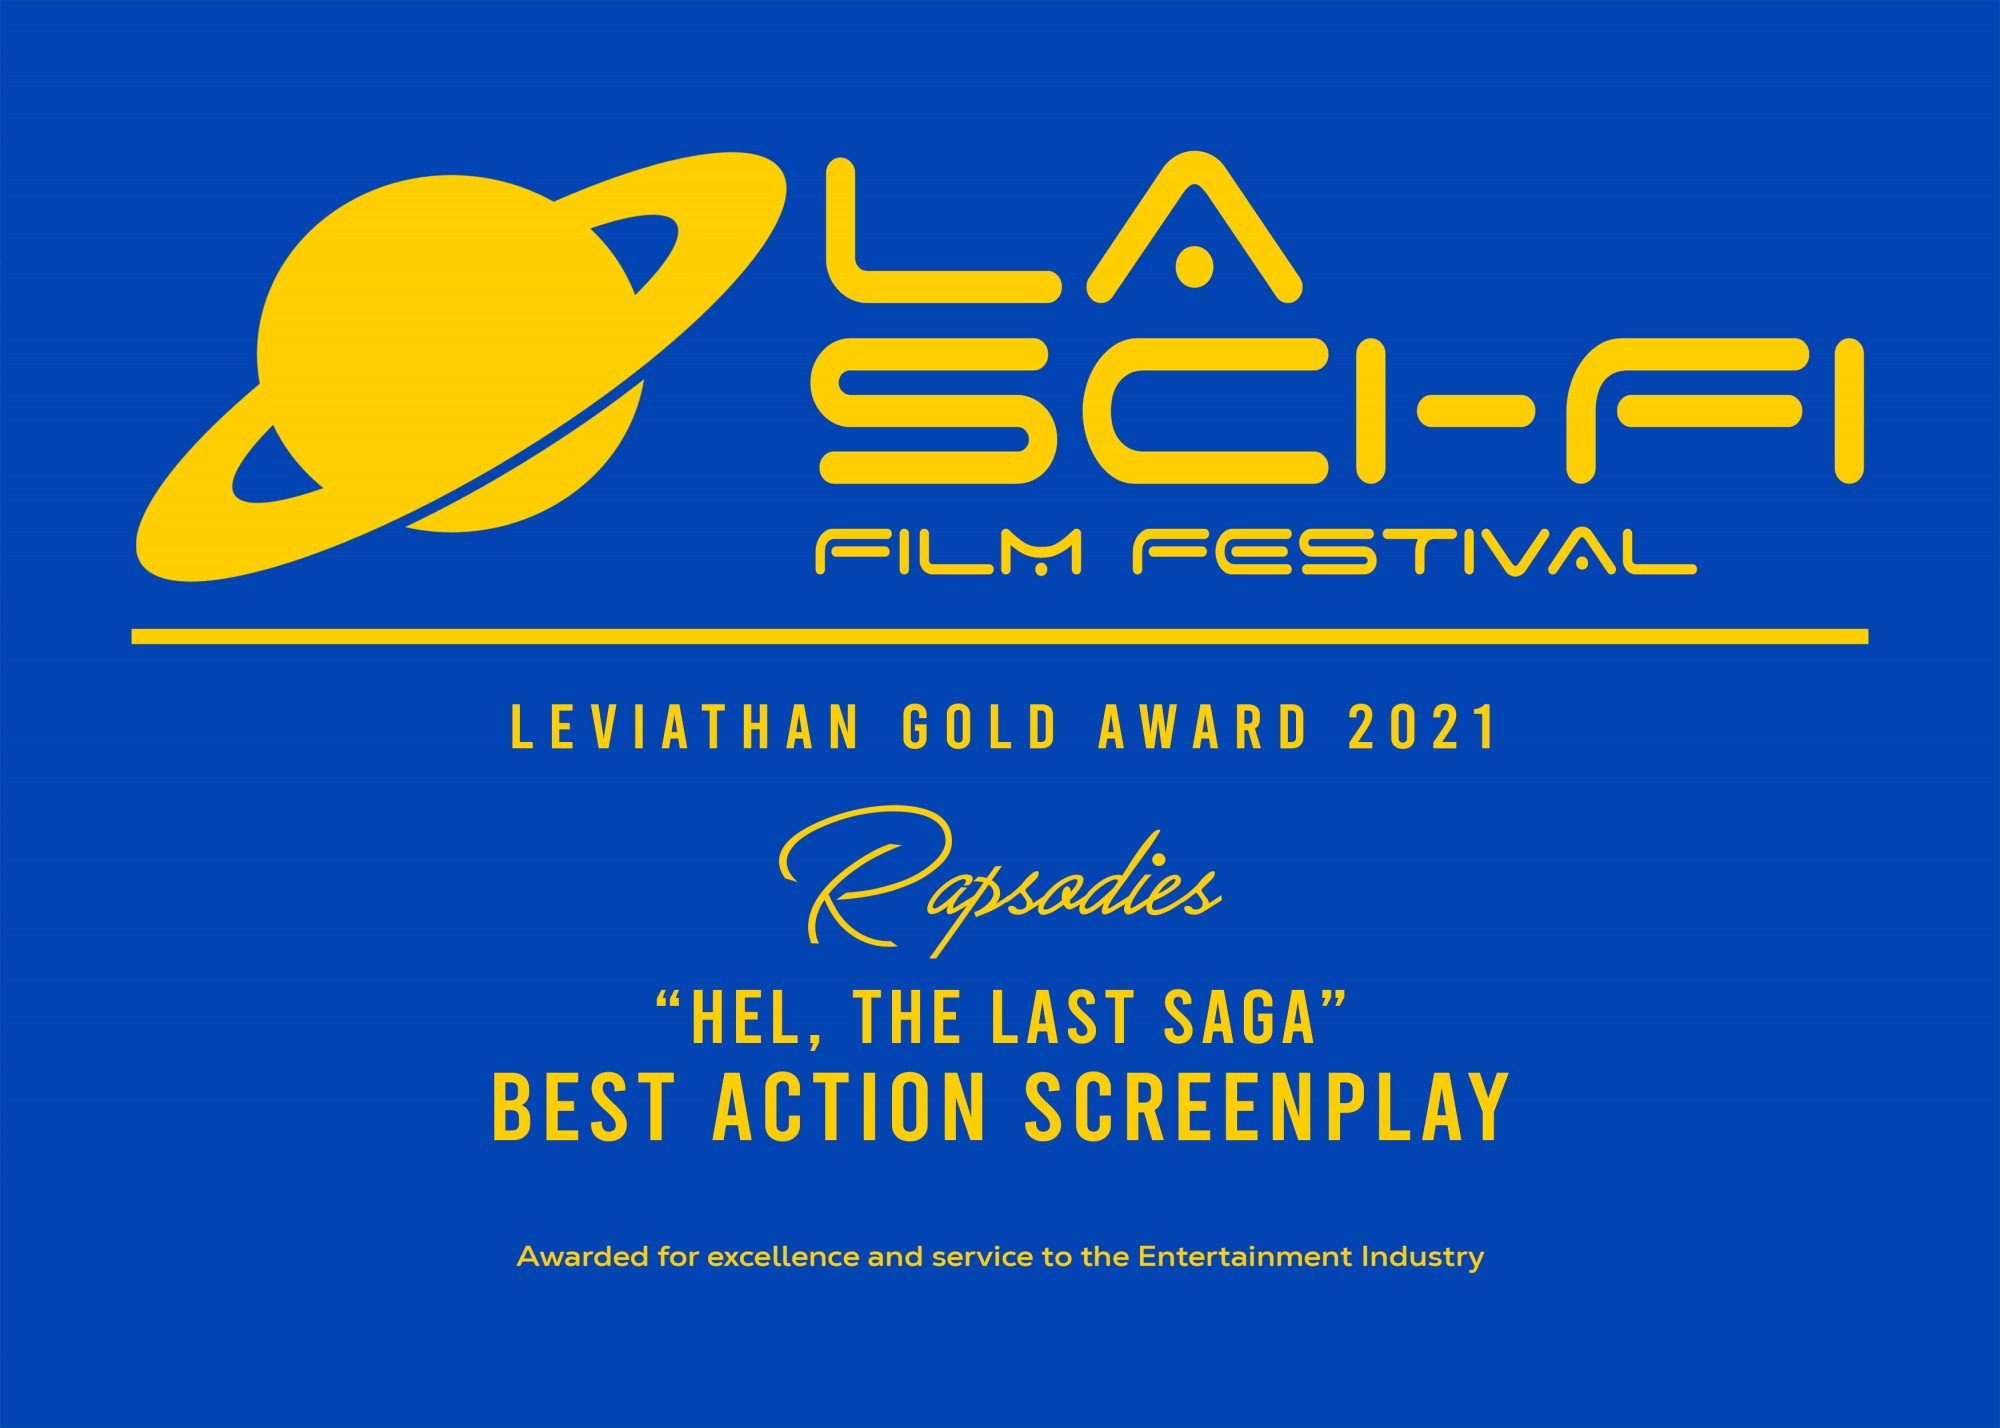 Hel, the last saga -  Leviathan Gold Award 2021 - Best Action Screenplay